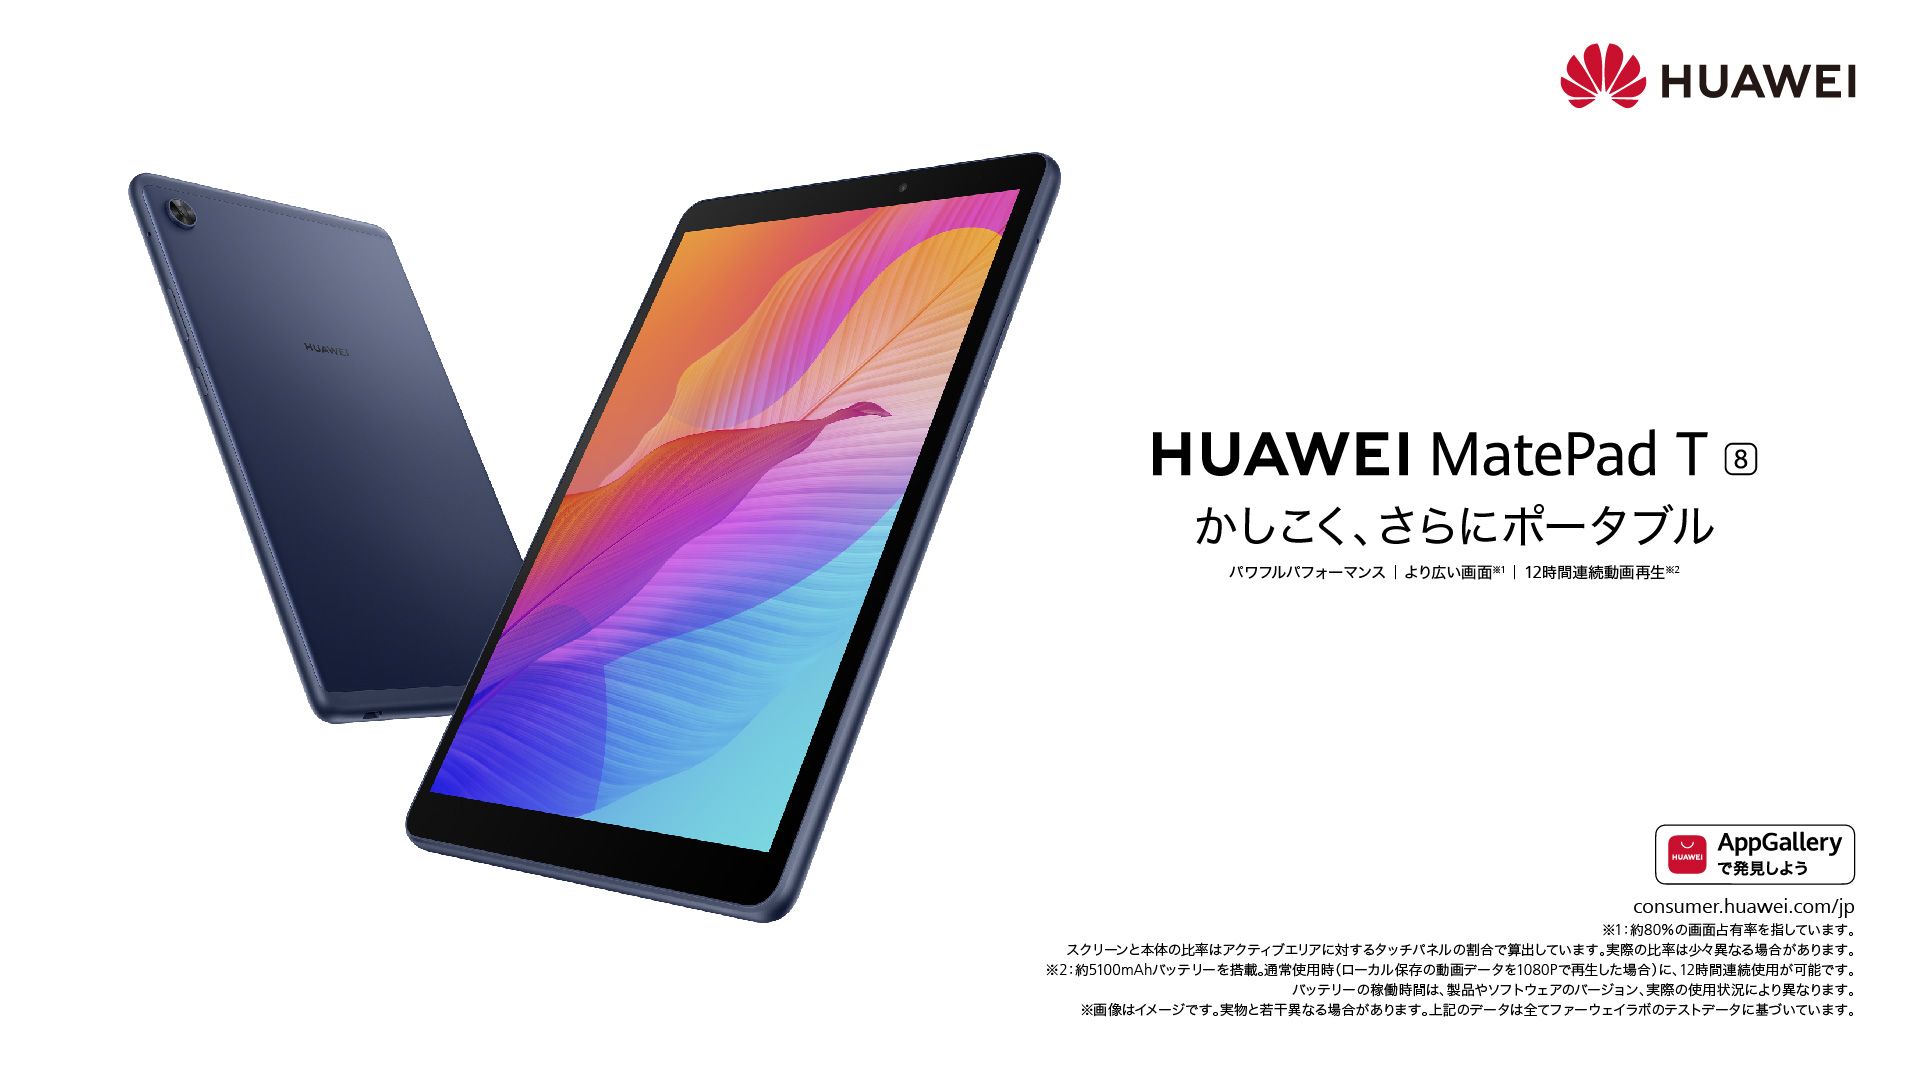 Huawei Mobile Jp 新タブレット発表 スリムベゼル仕様の約10 4インチフルビューディスプレイ Huawei Matepad は6月12日 金 発売 持ち運びに便利で片手持ちも楽々 Huawei Matepad T 8 は7月初旬発売 Huawei Matepad Matepadt8 製品